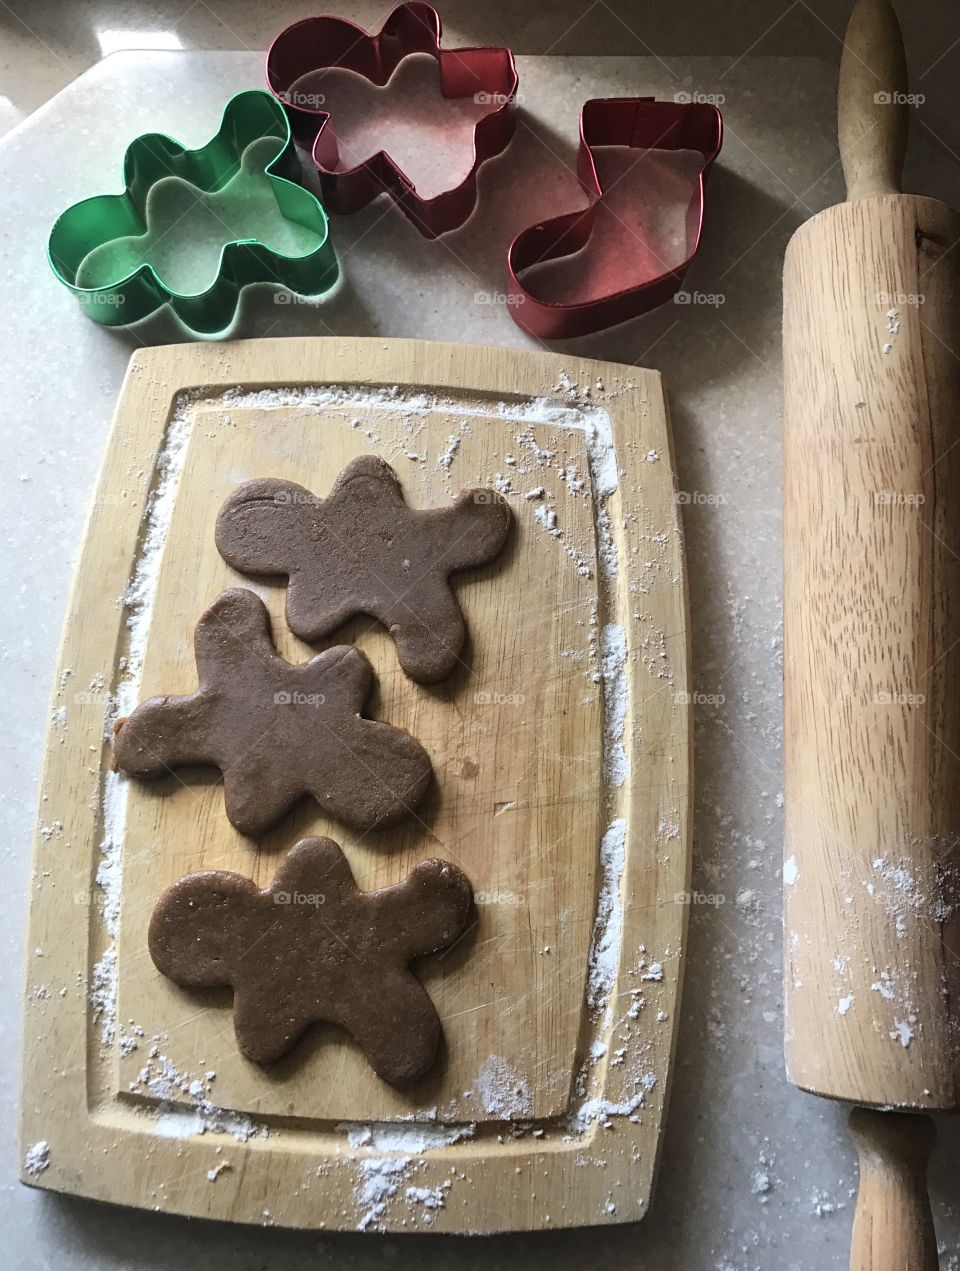 Baking gingerbread cookies